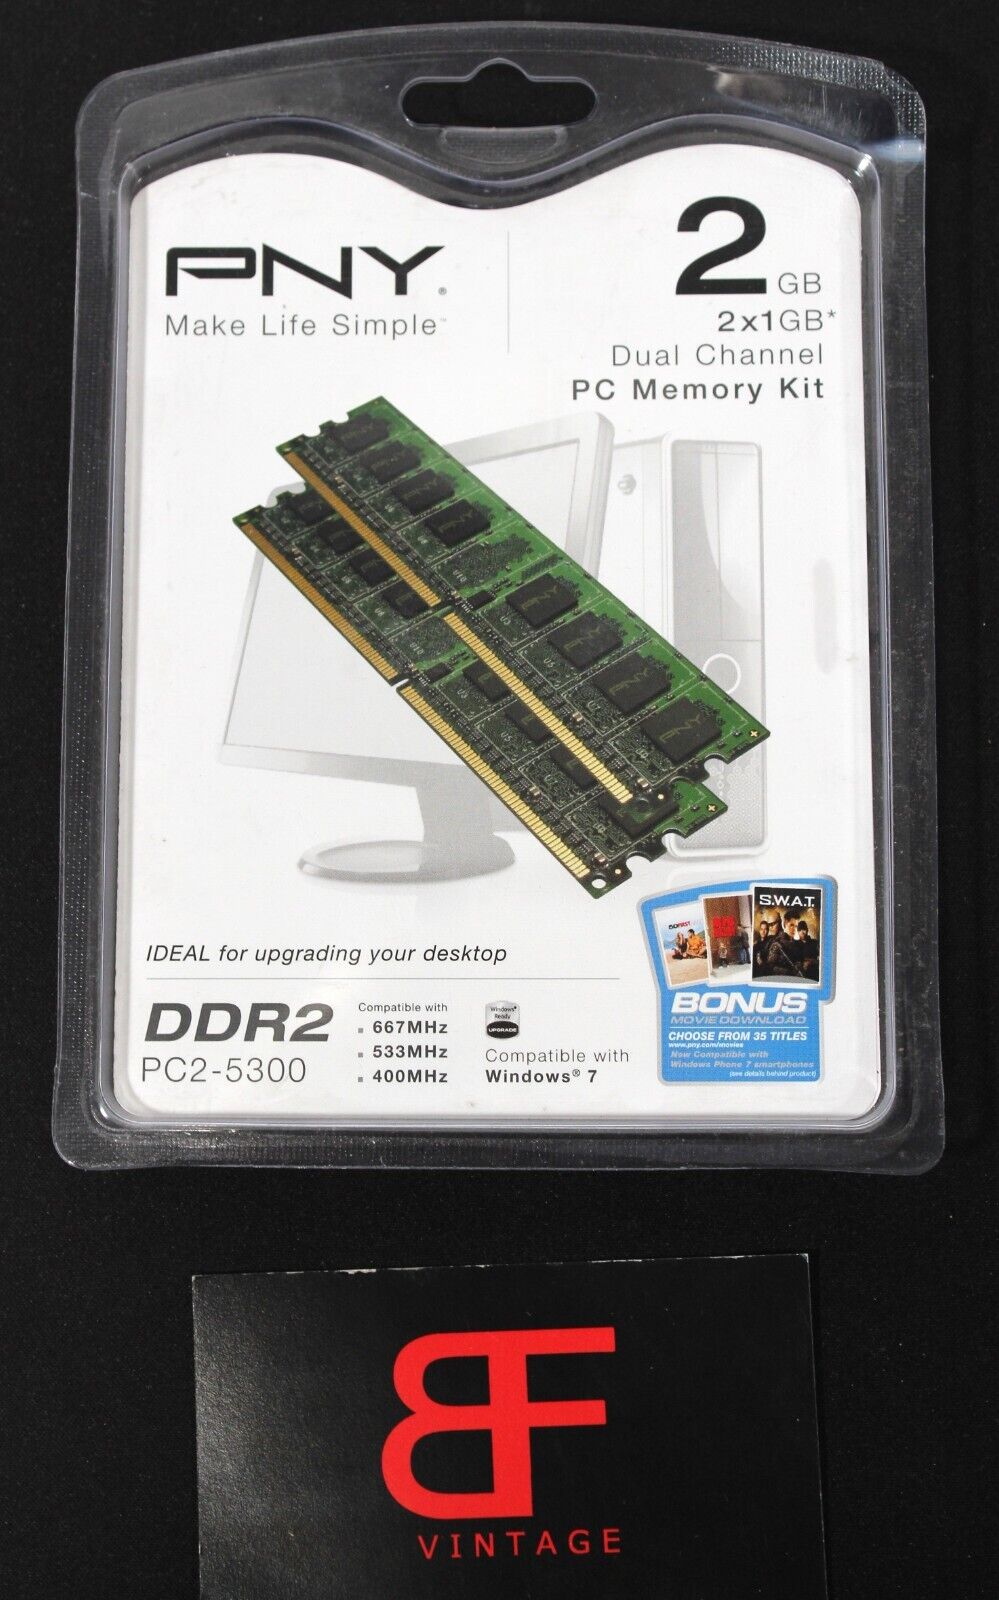 PNY DDR2 PC2-5300 2 GB (2X1 GB) Dual Channel PC Memory Kit New Sealed EL3057H